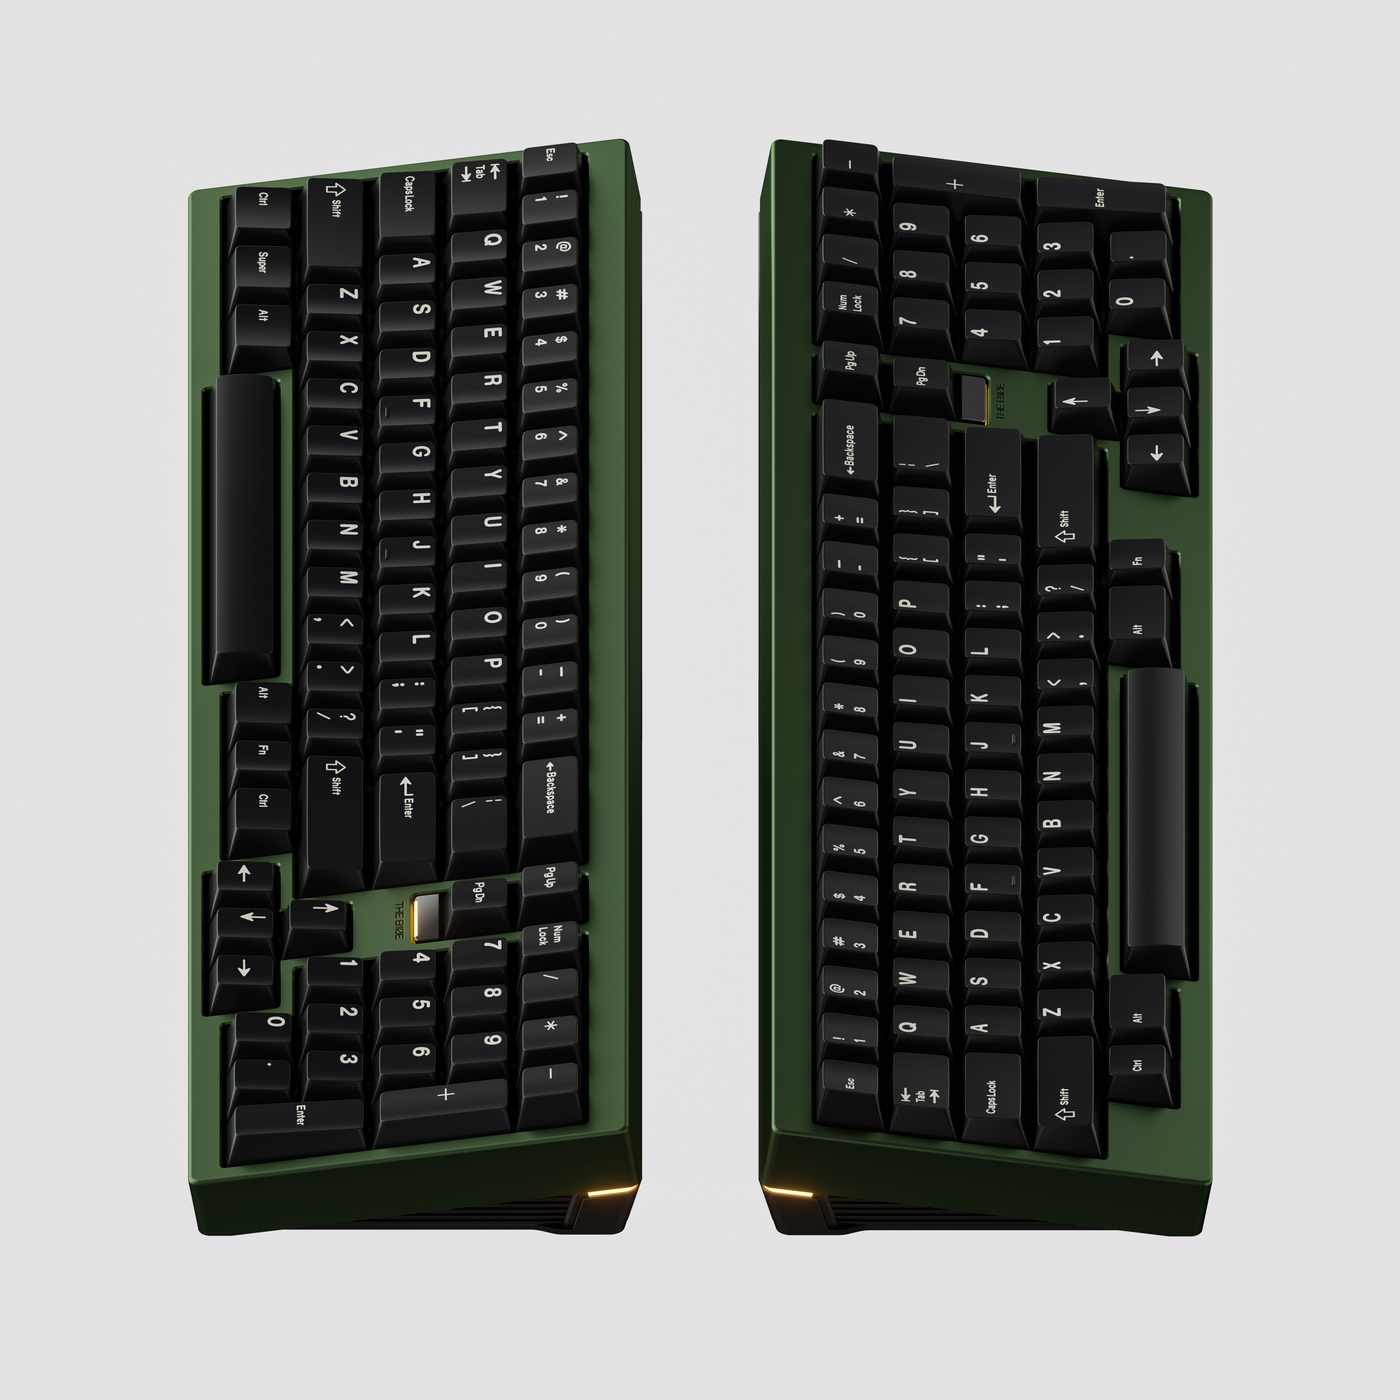 [Group Buy] Neson Studio 810E Mechanical Keyboard Kit